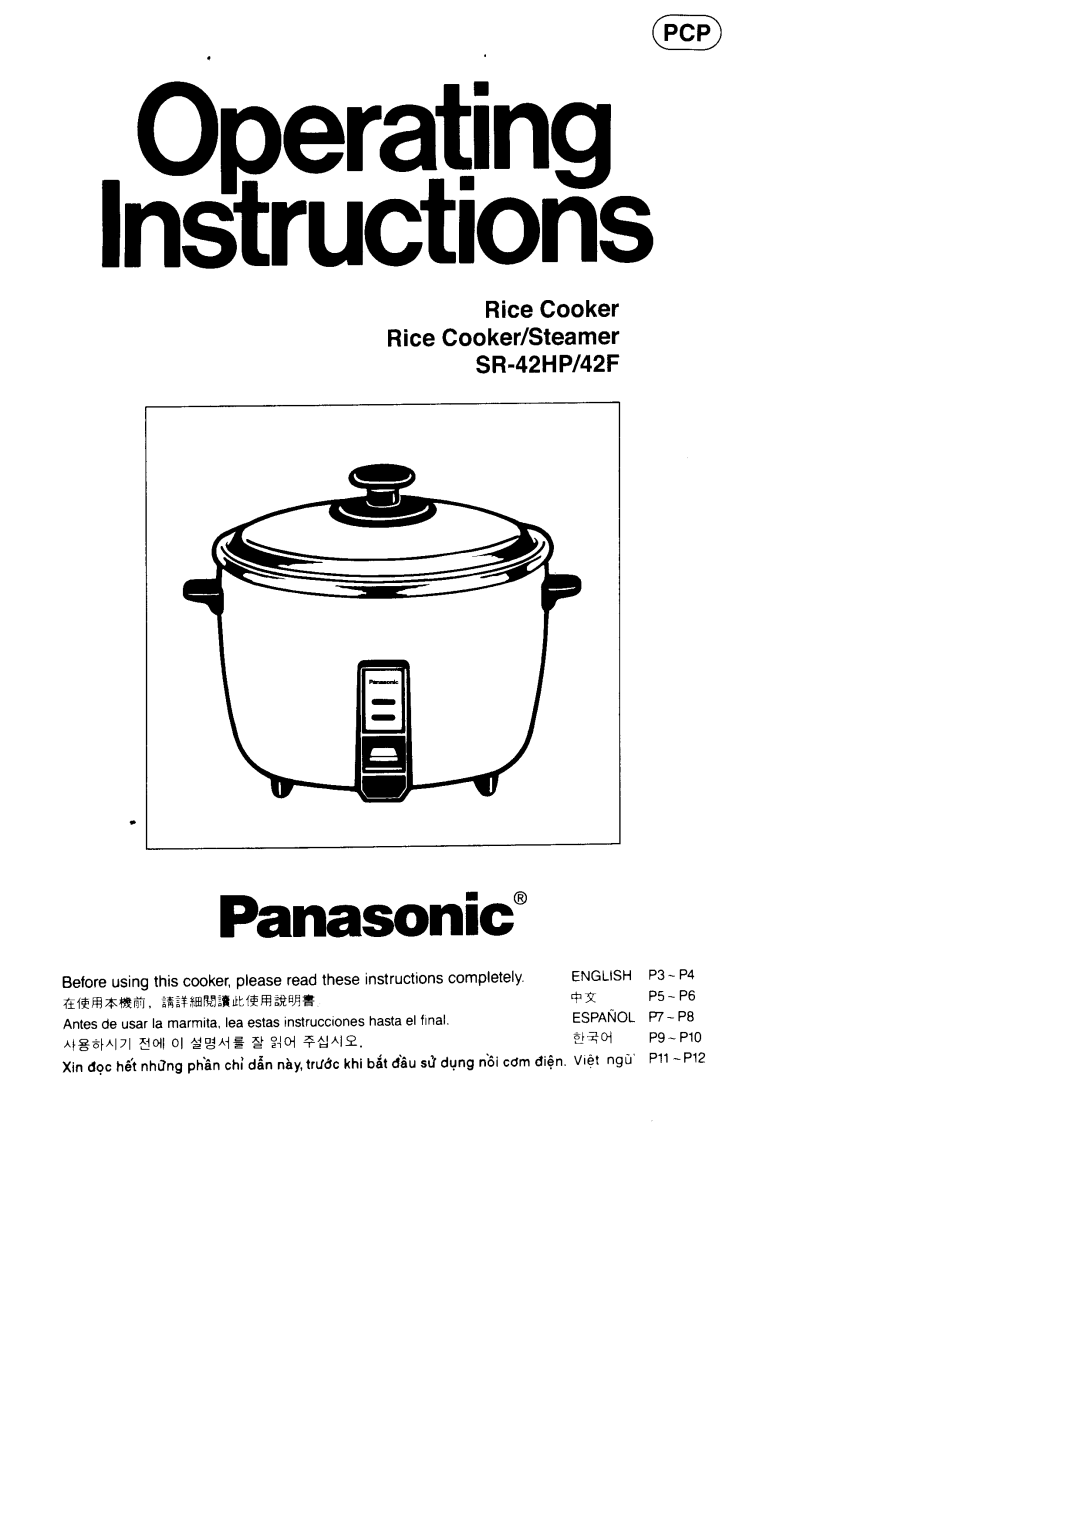 Panasonic SR-42HP/42F manual RiceCooker RiceCooker/Steamer SR-42HPl42F, Operdng, lnStructiorT, PanasoniC 